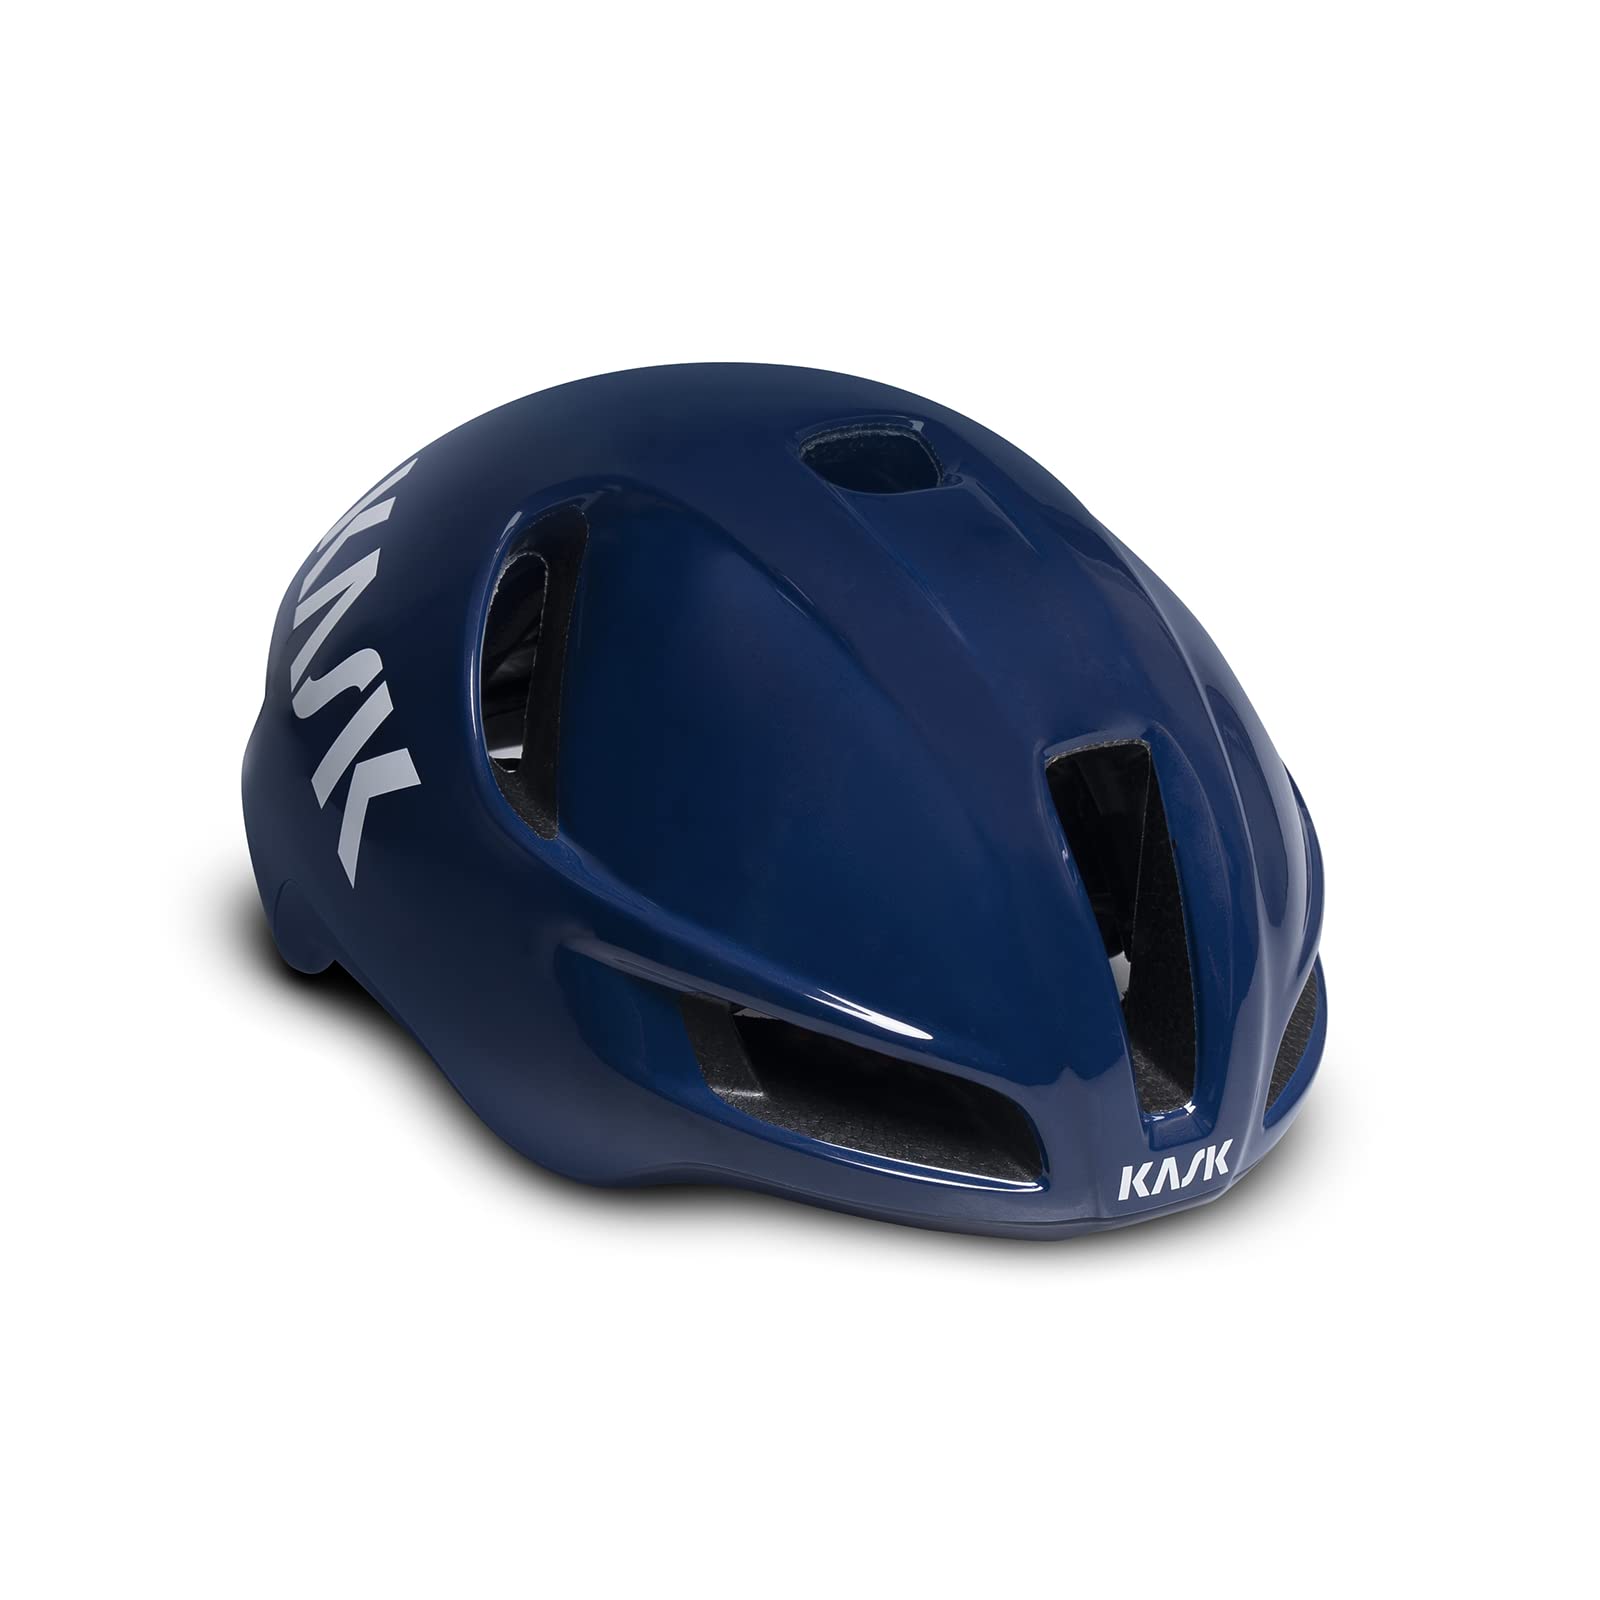 Kask Utopia Y Bike Helmet I Aerodynamic Road Cycling Triathlon Helmet for Speed - Oxford Blue - Large